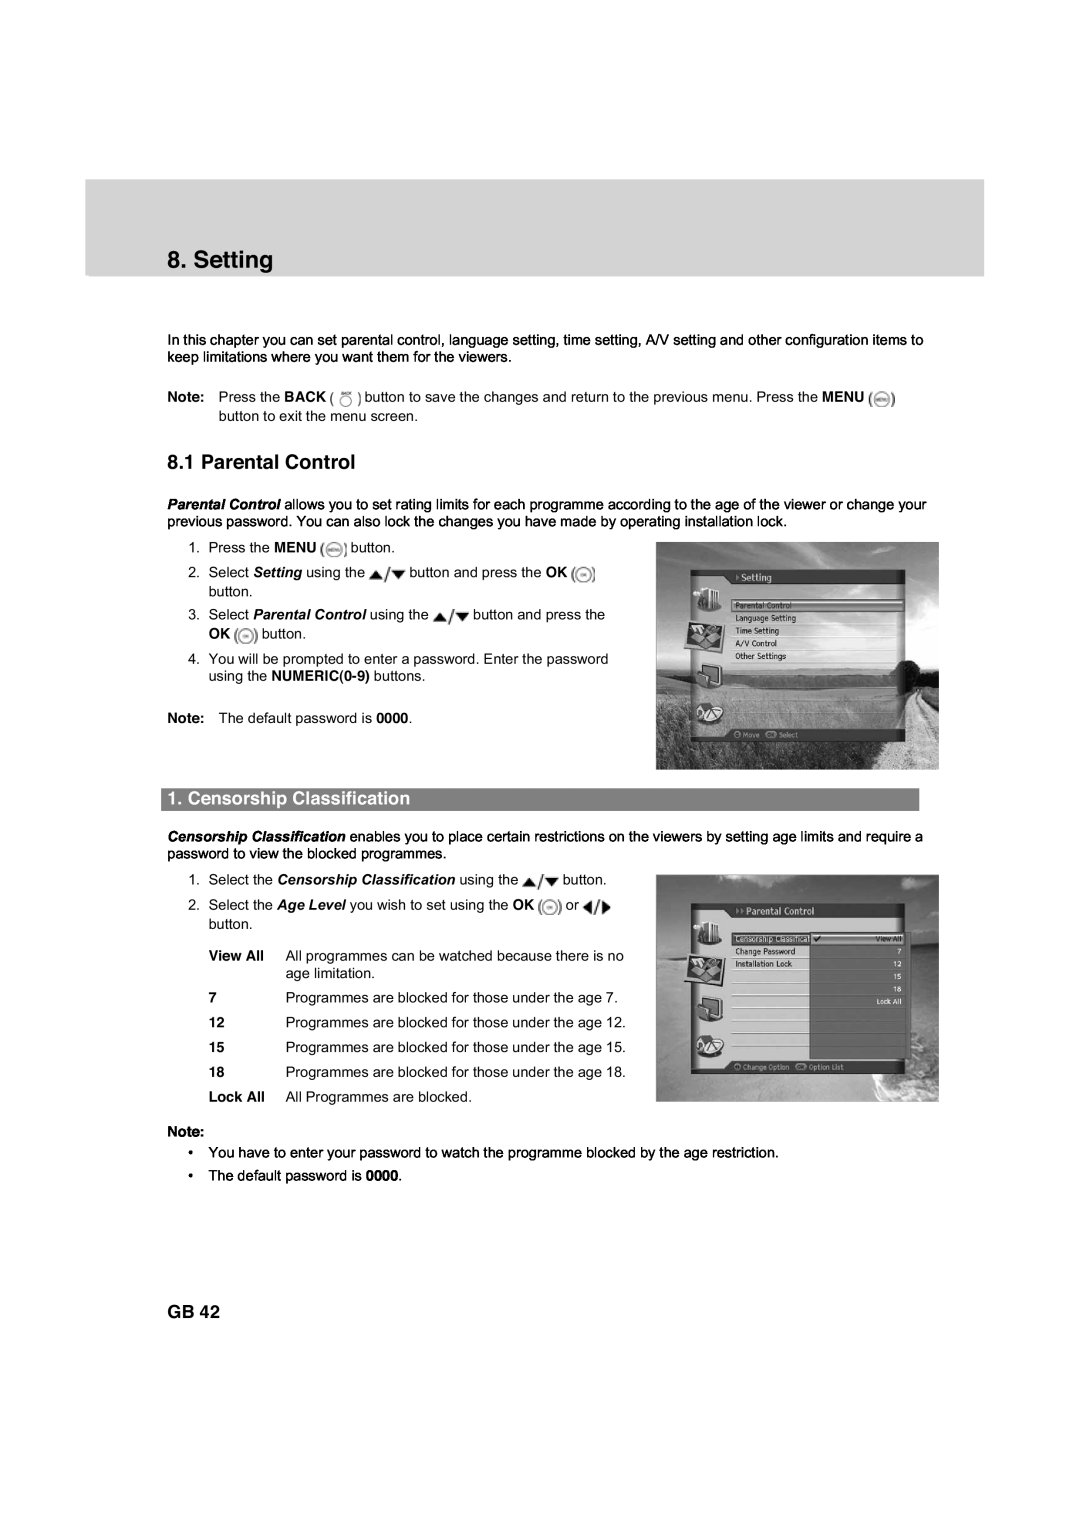 Humax HDCI-2000 manual Setting, Parental Control, Censorship Classification 